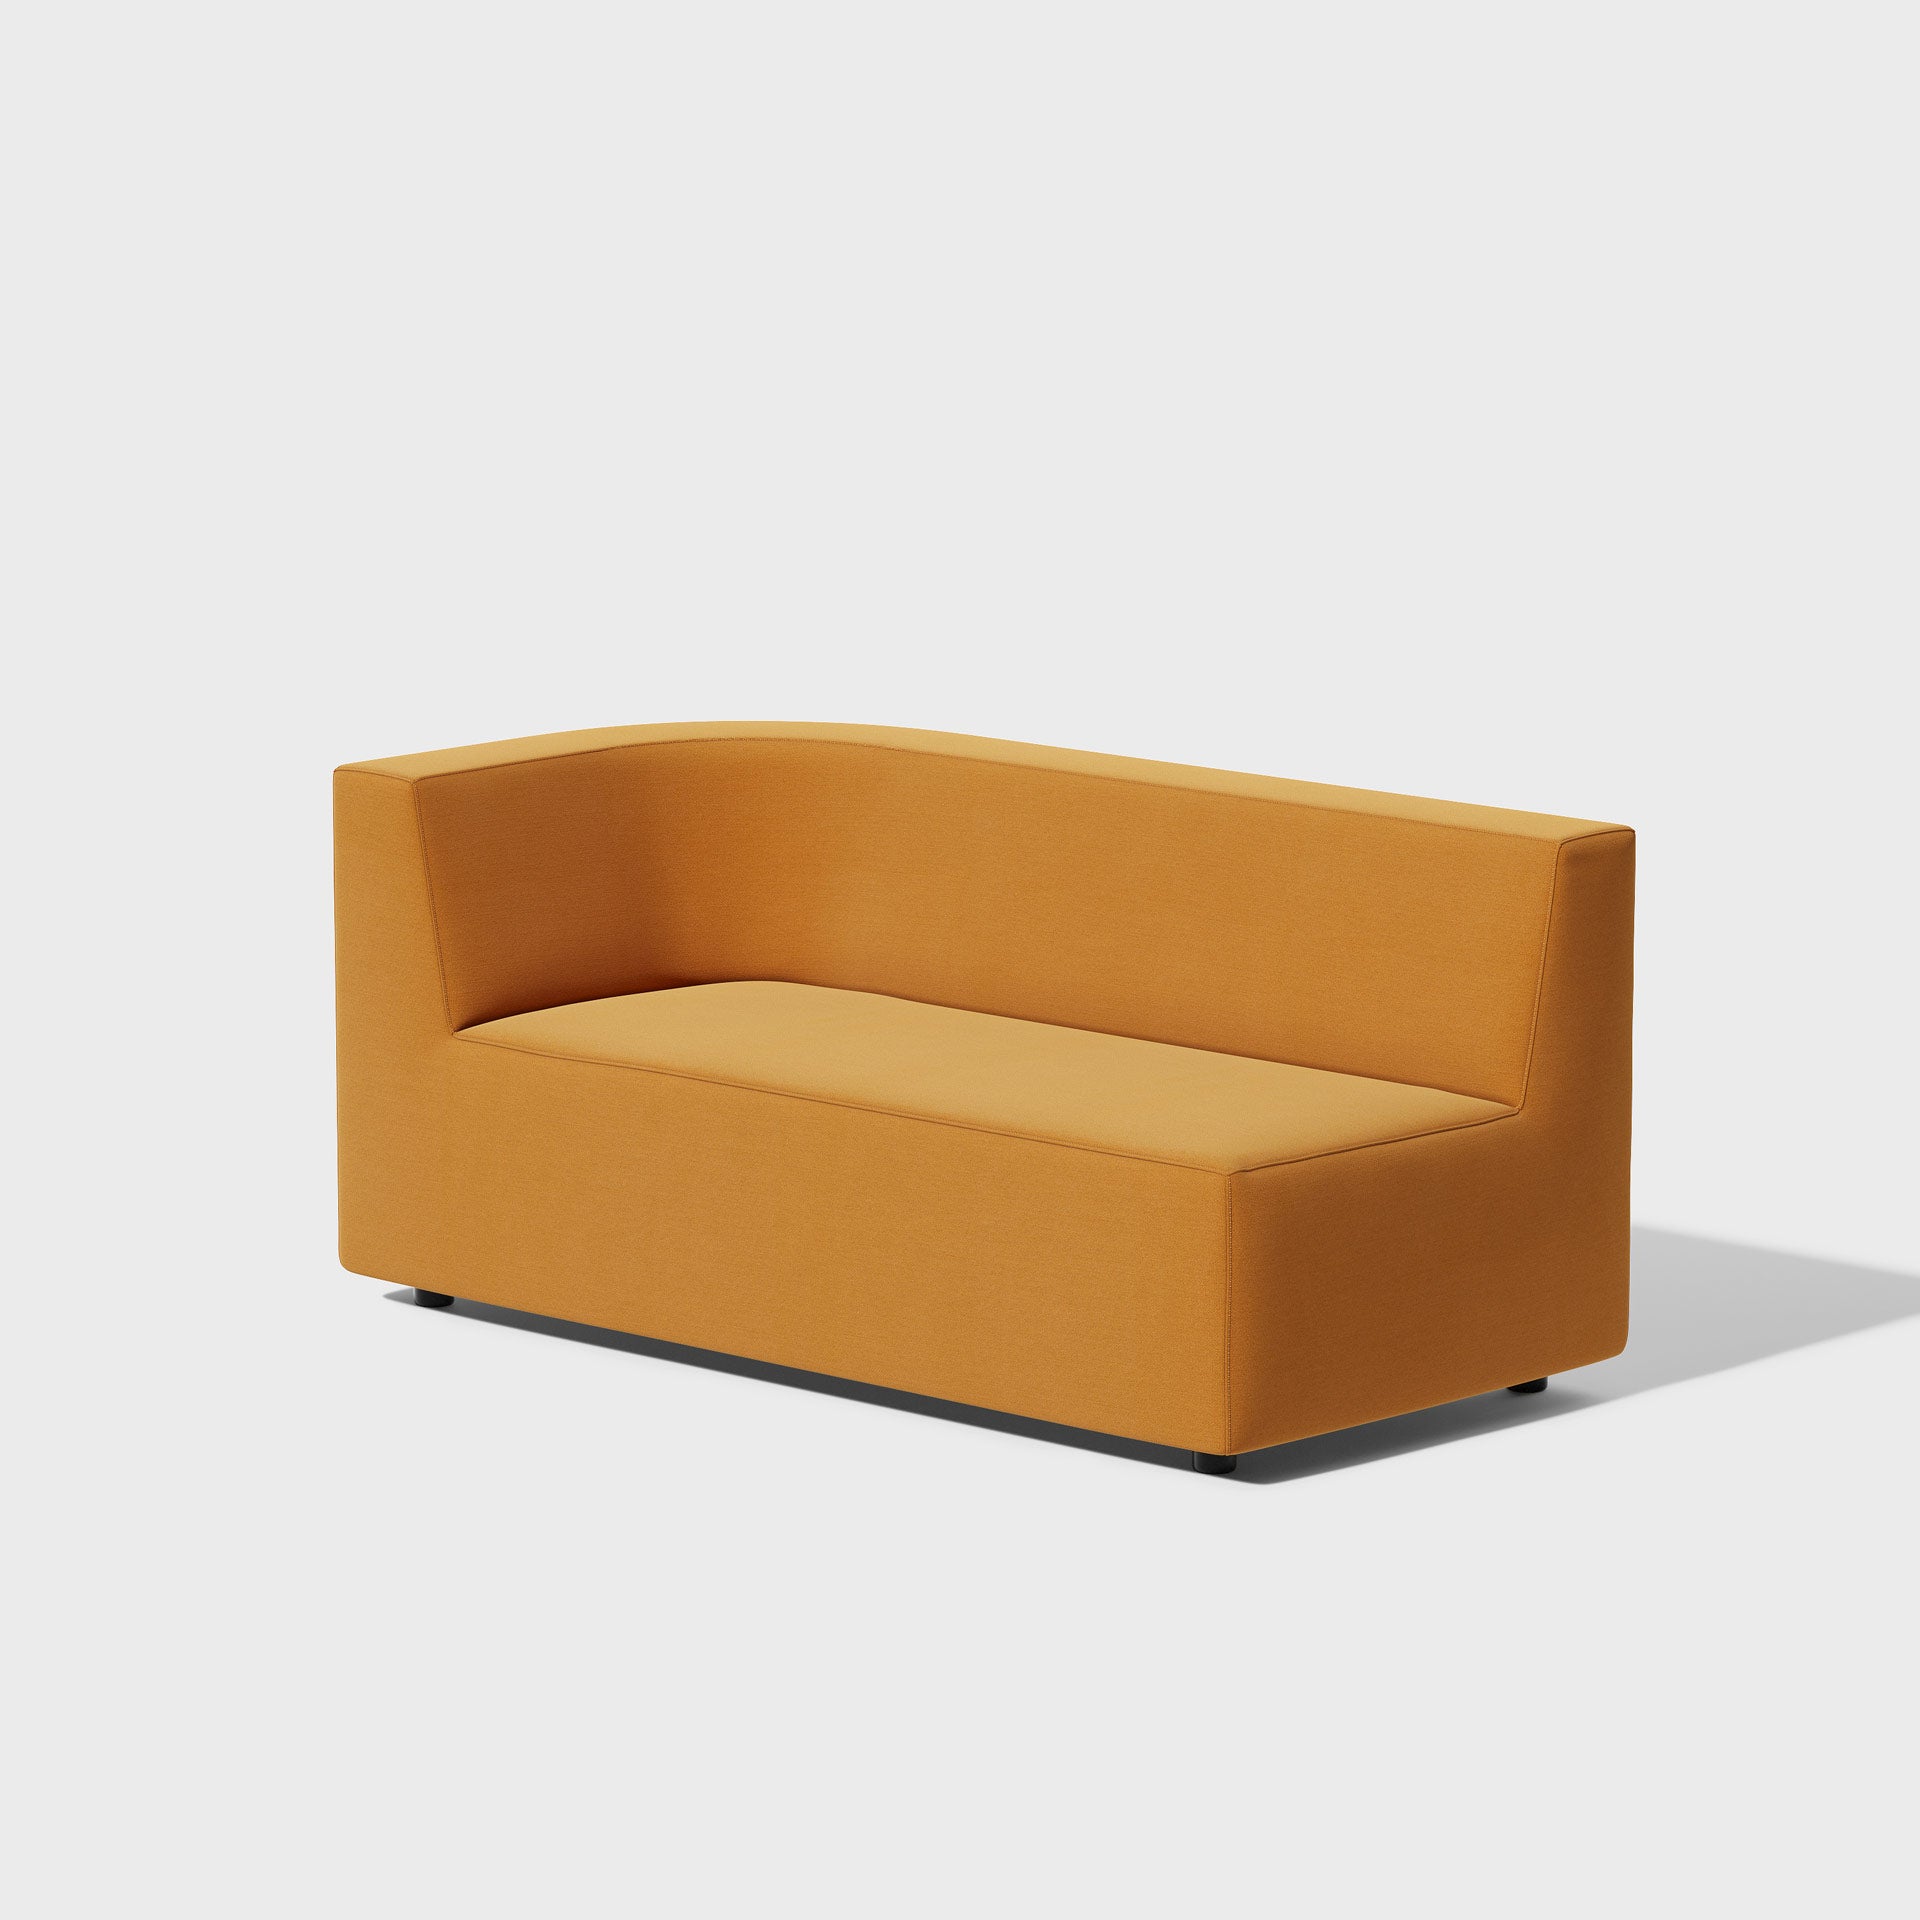 Confetti Modular Lounge | DesignByThem ** HF5 - Kvadrat Febrik Planum - 0351 / Low Profile Feet / Closed Open